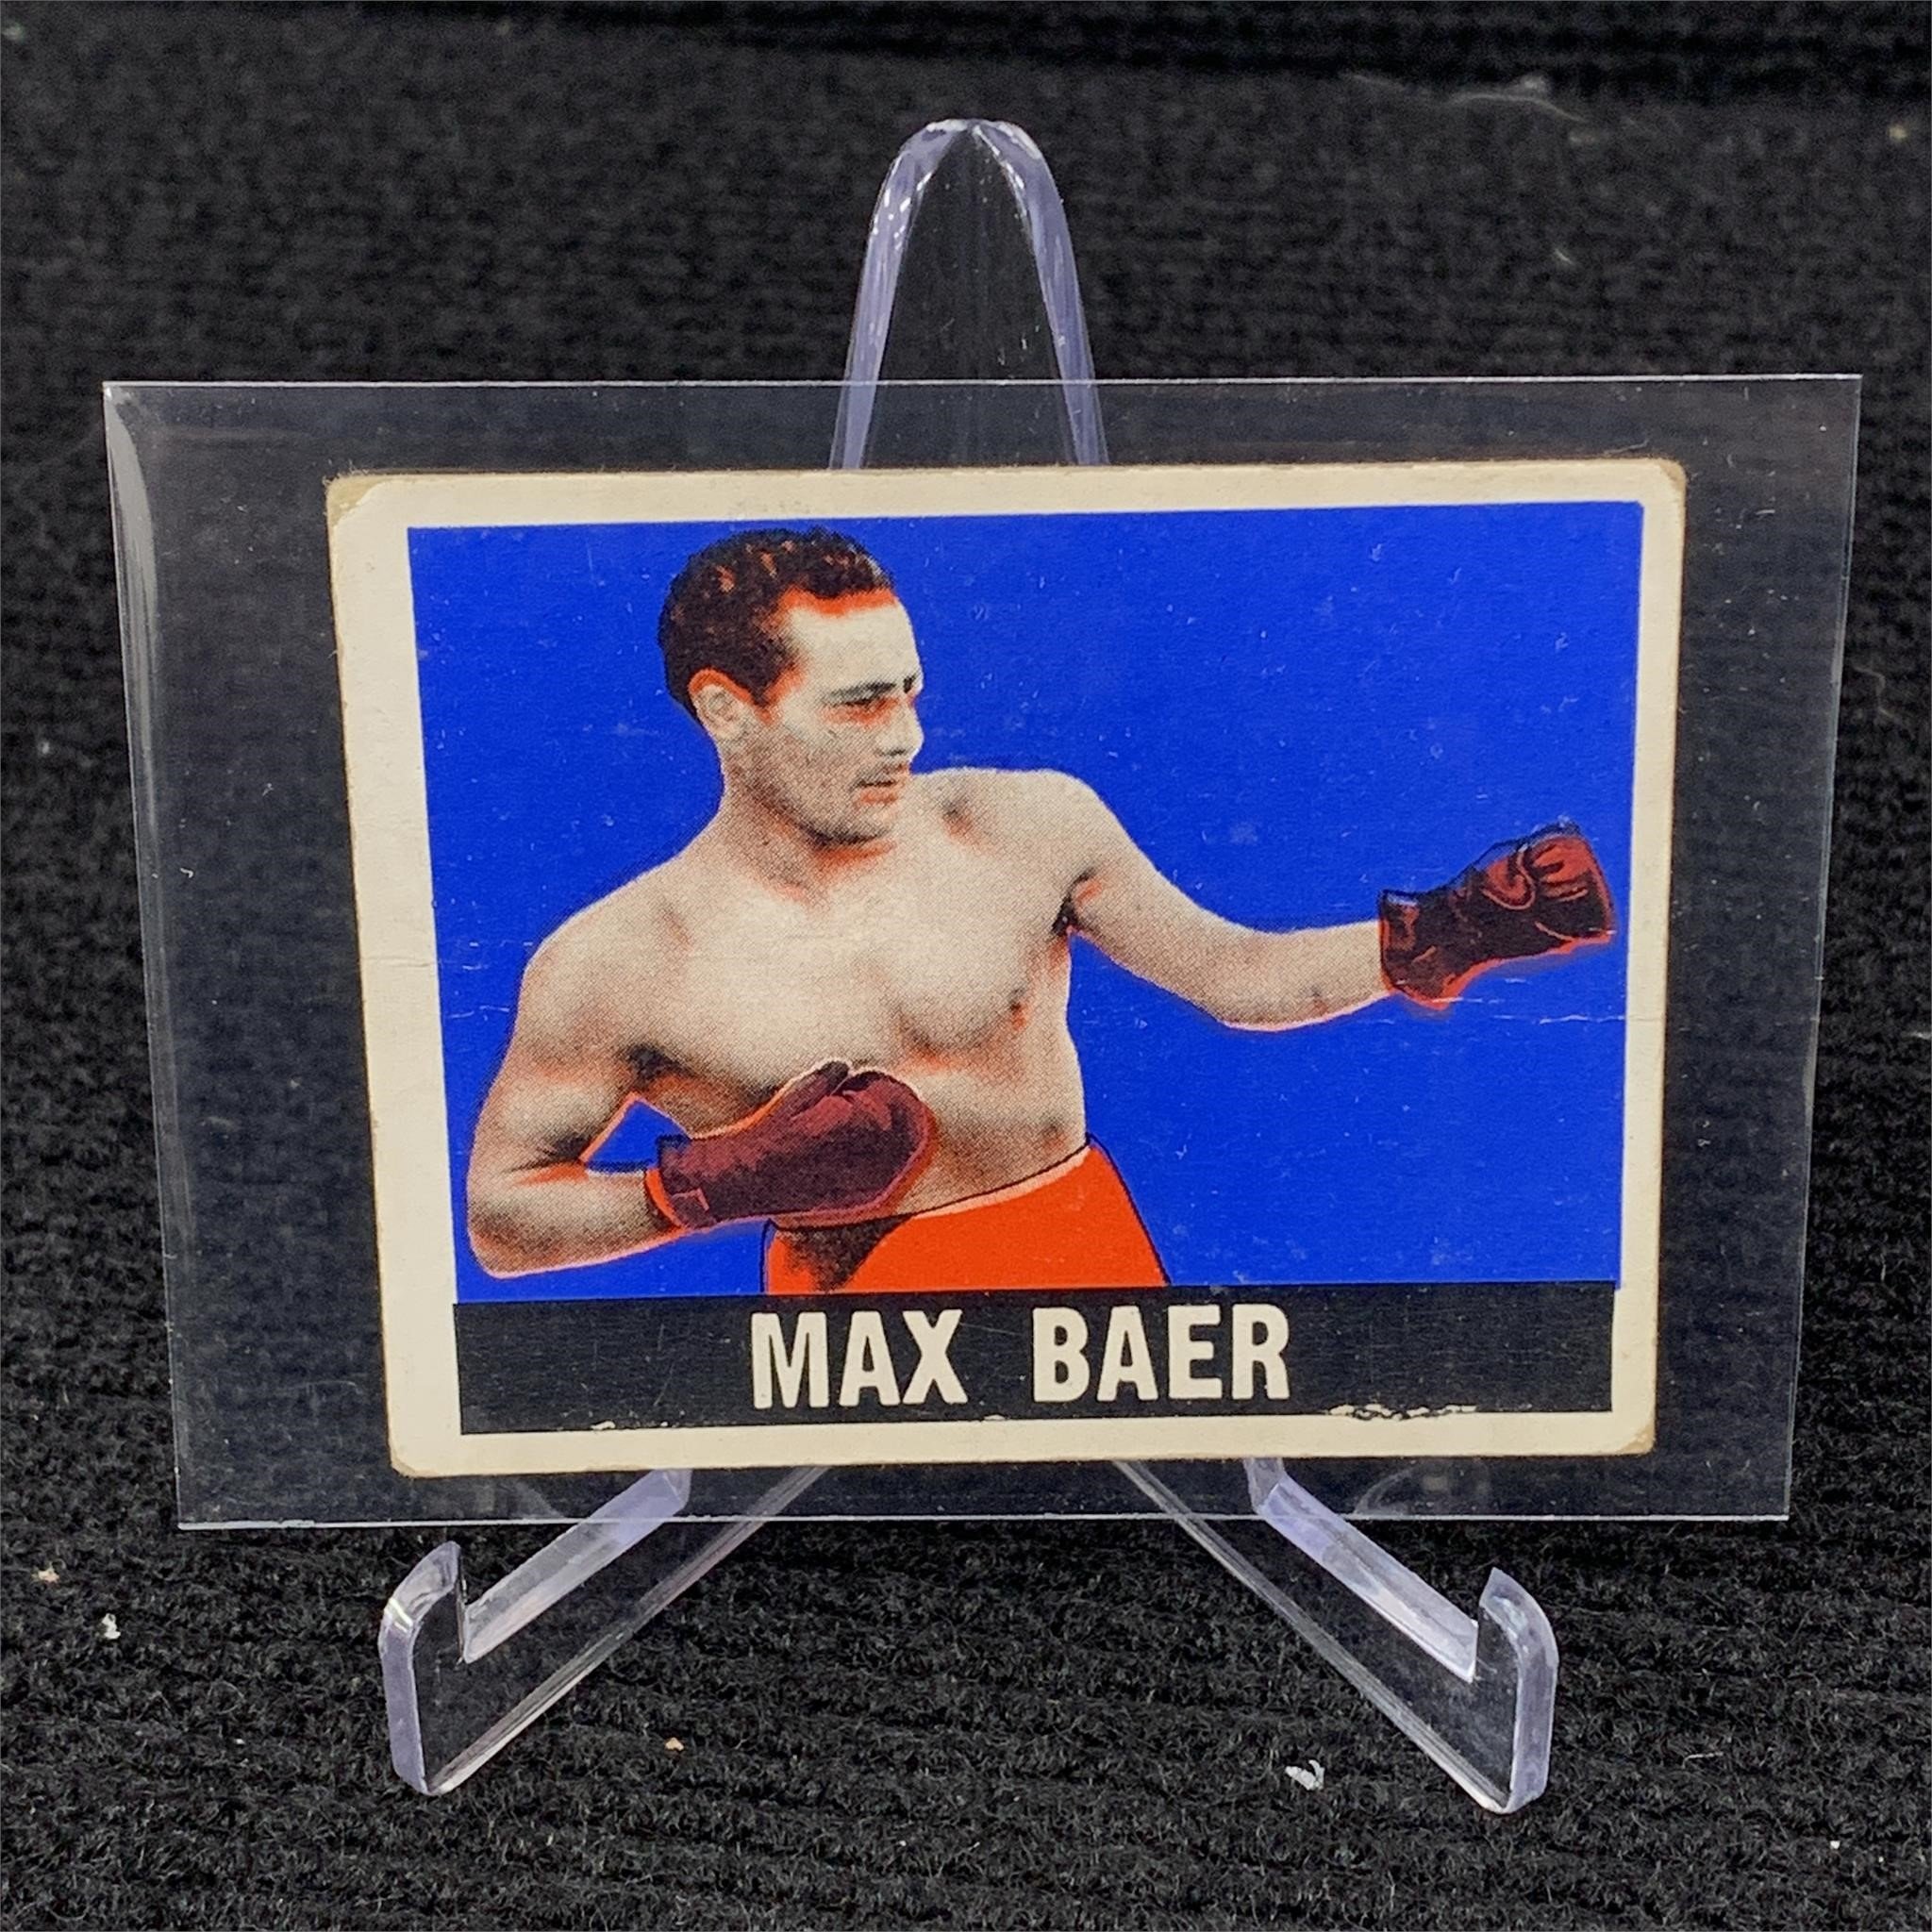 1948 Leaf Max Baer Boxing Card